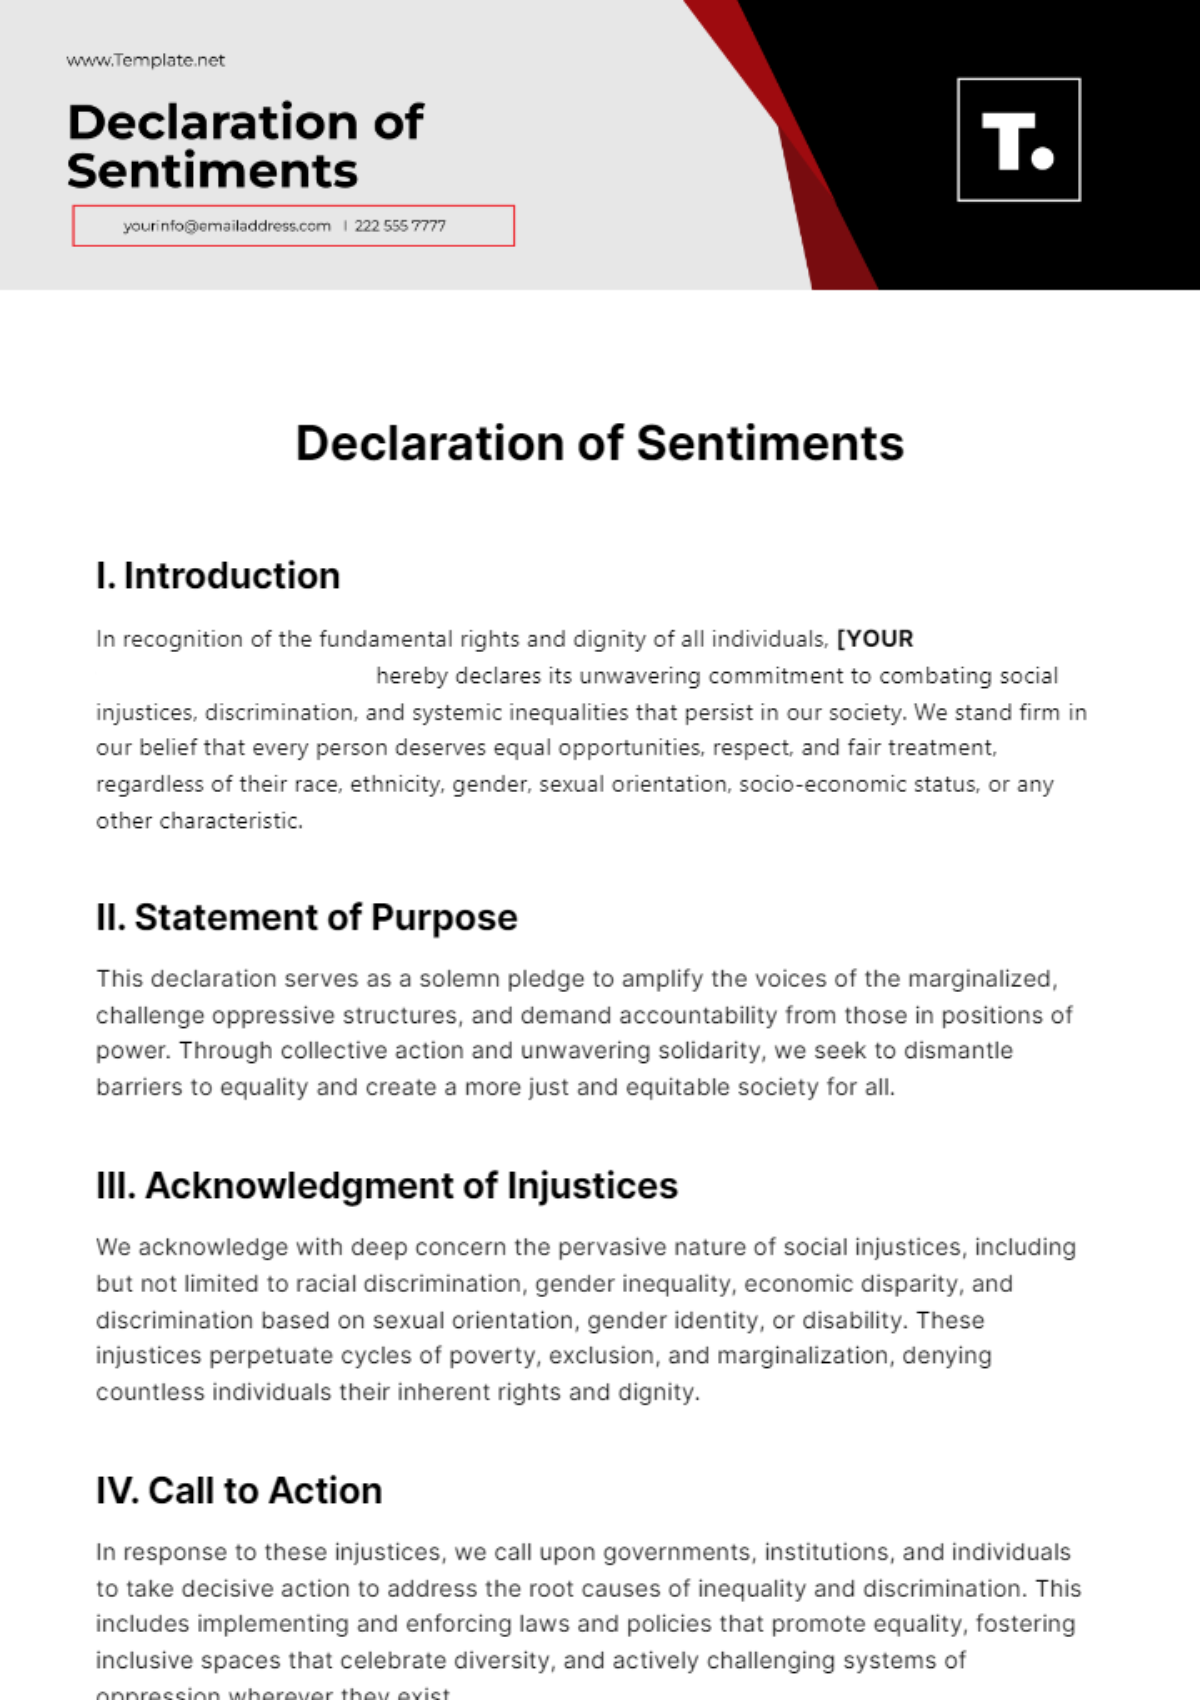 Declaration of Sentiments Template